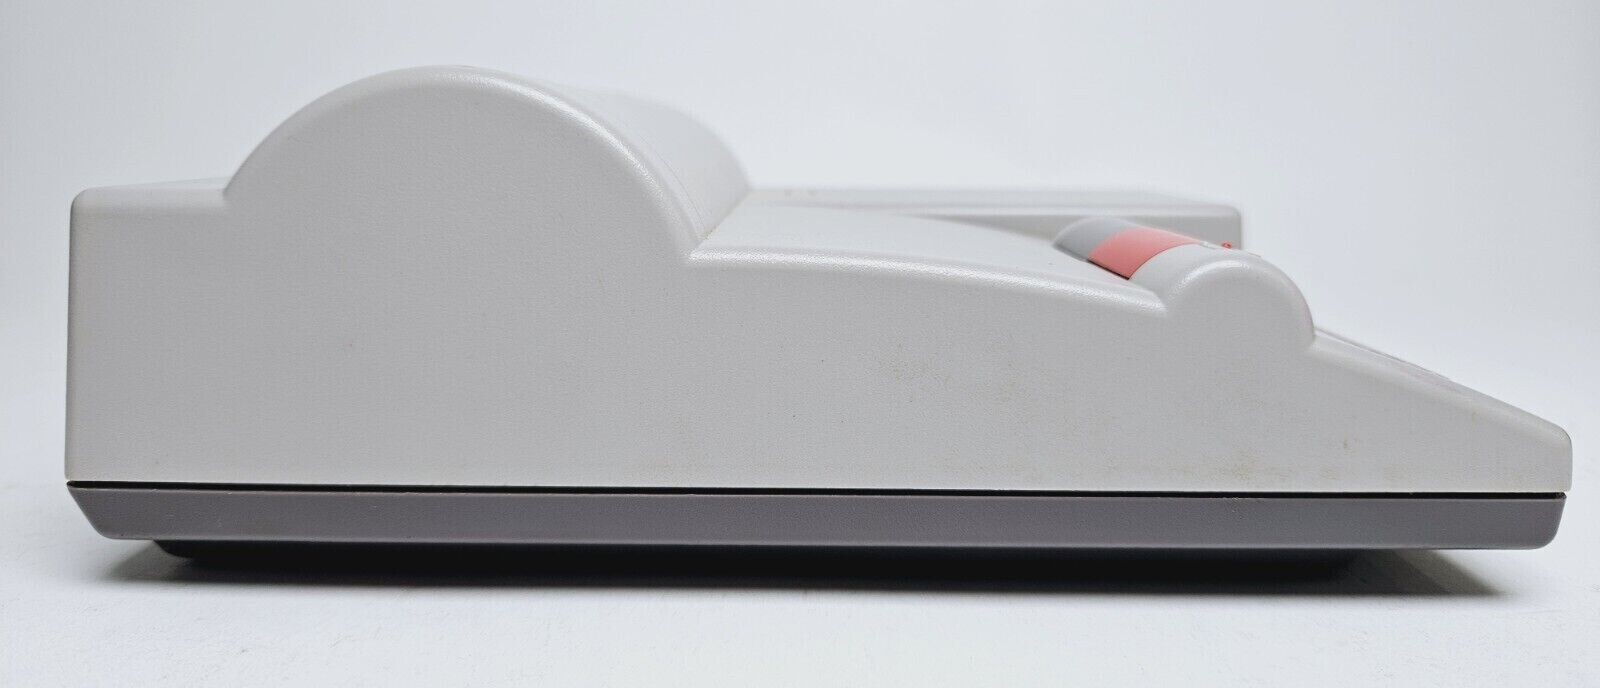 NES Toploader Console [AUS]